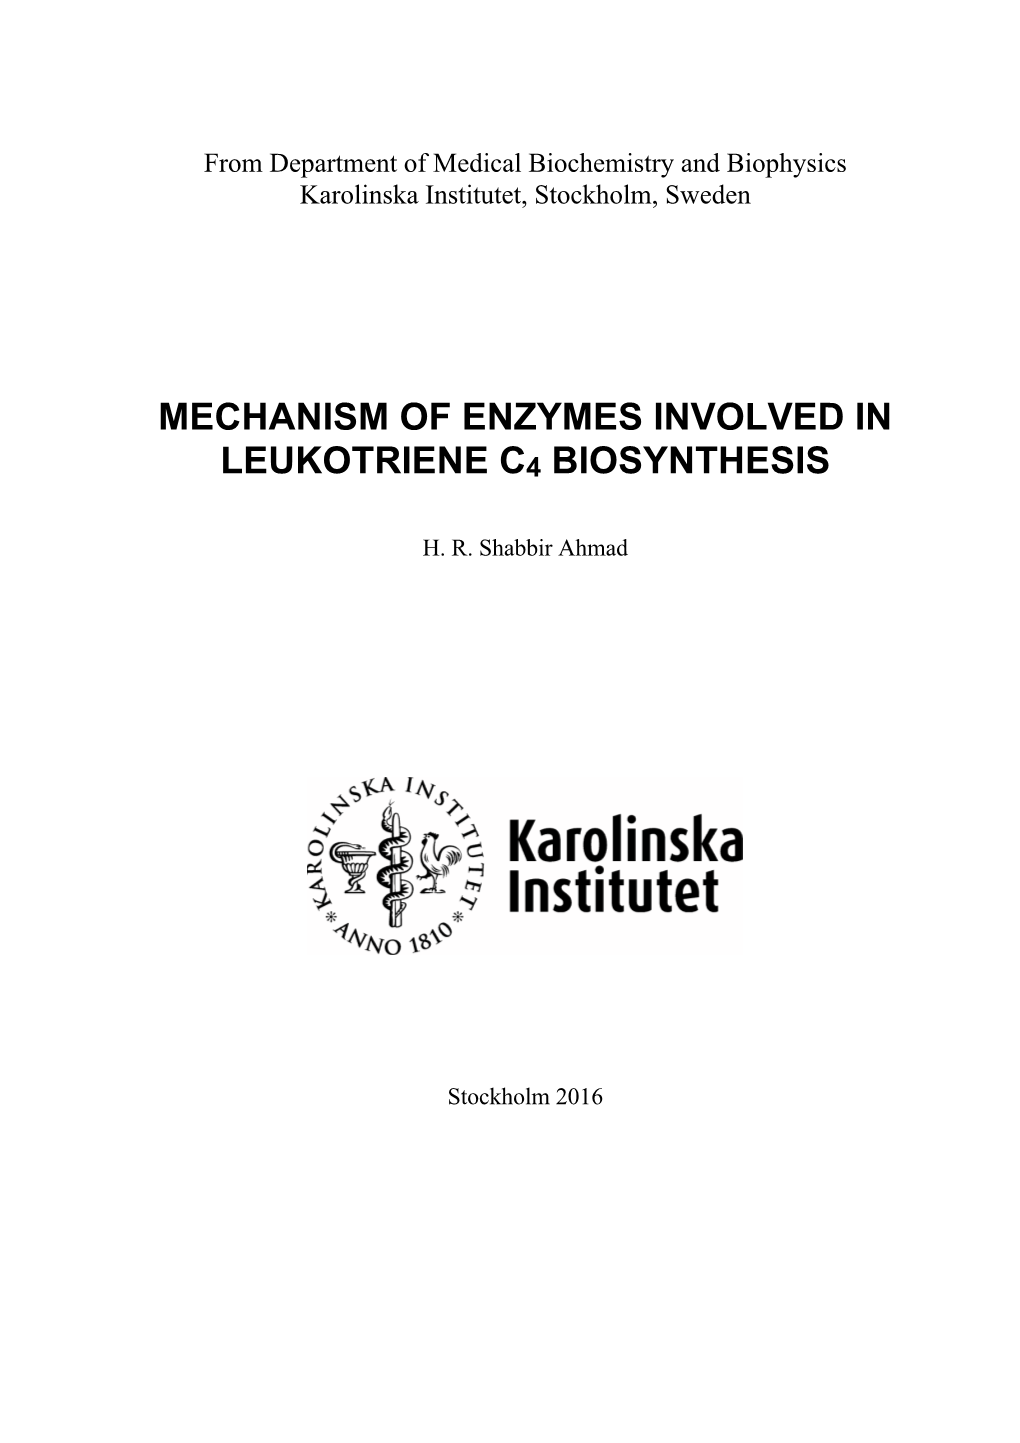 Mechanism of Enzymes Involved in Leukotriene C4 Biosynthesis